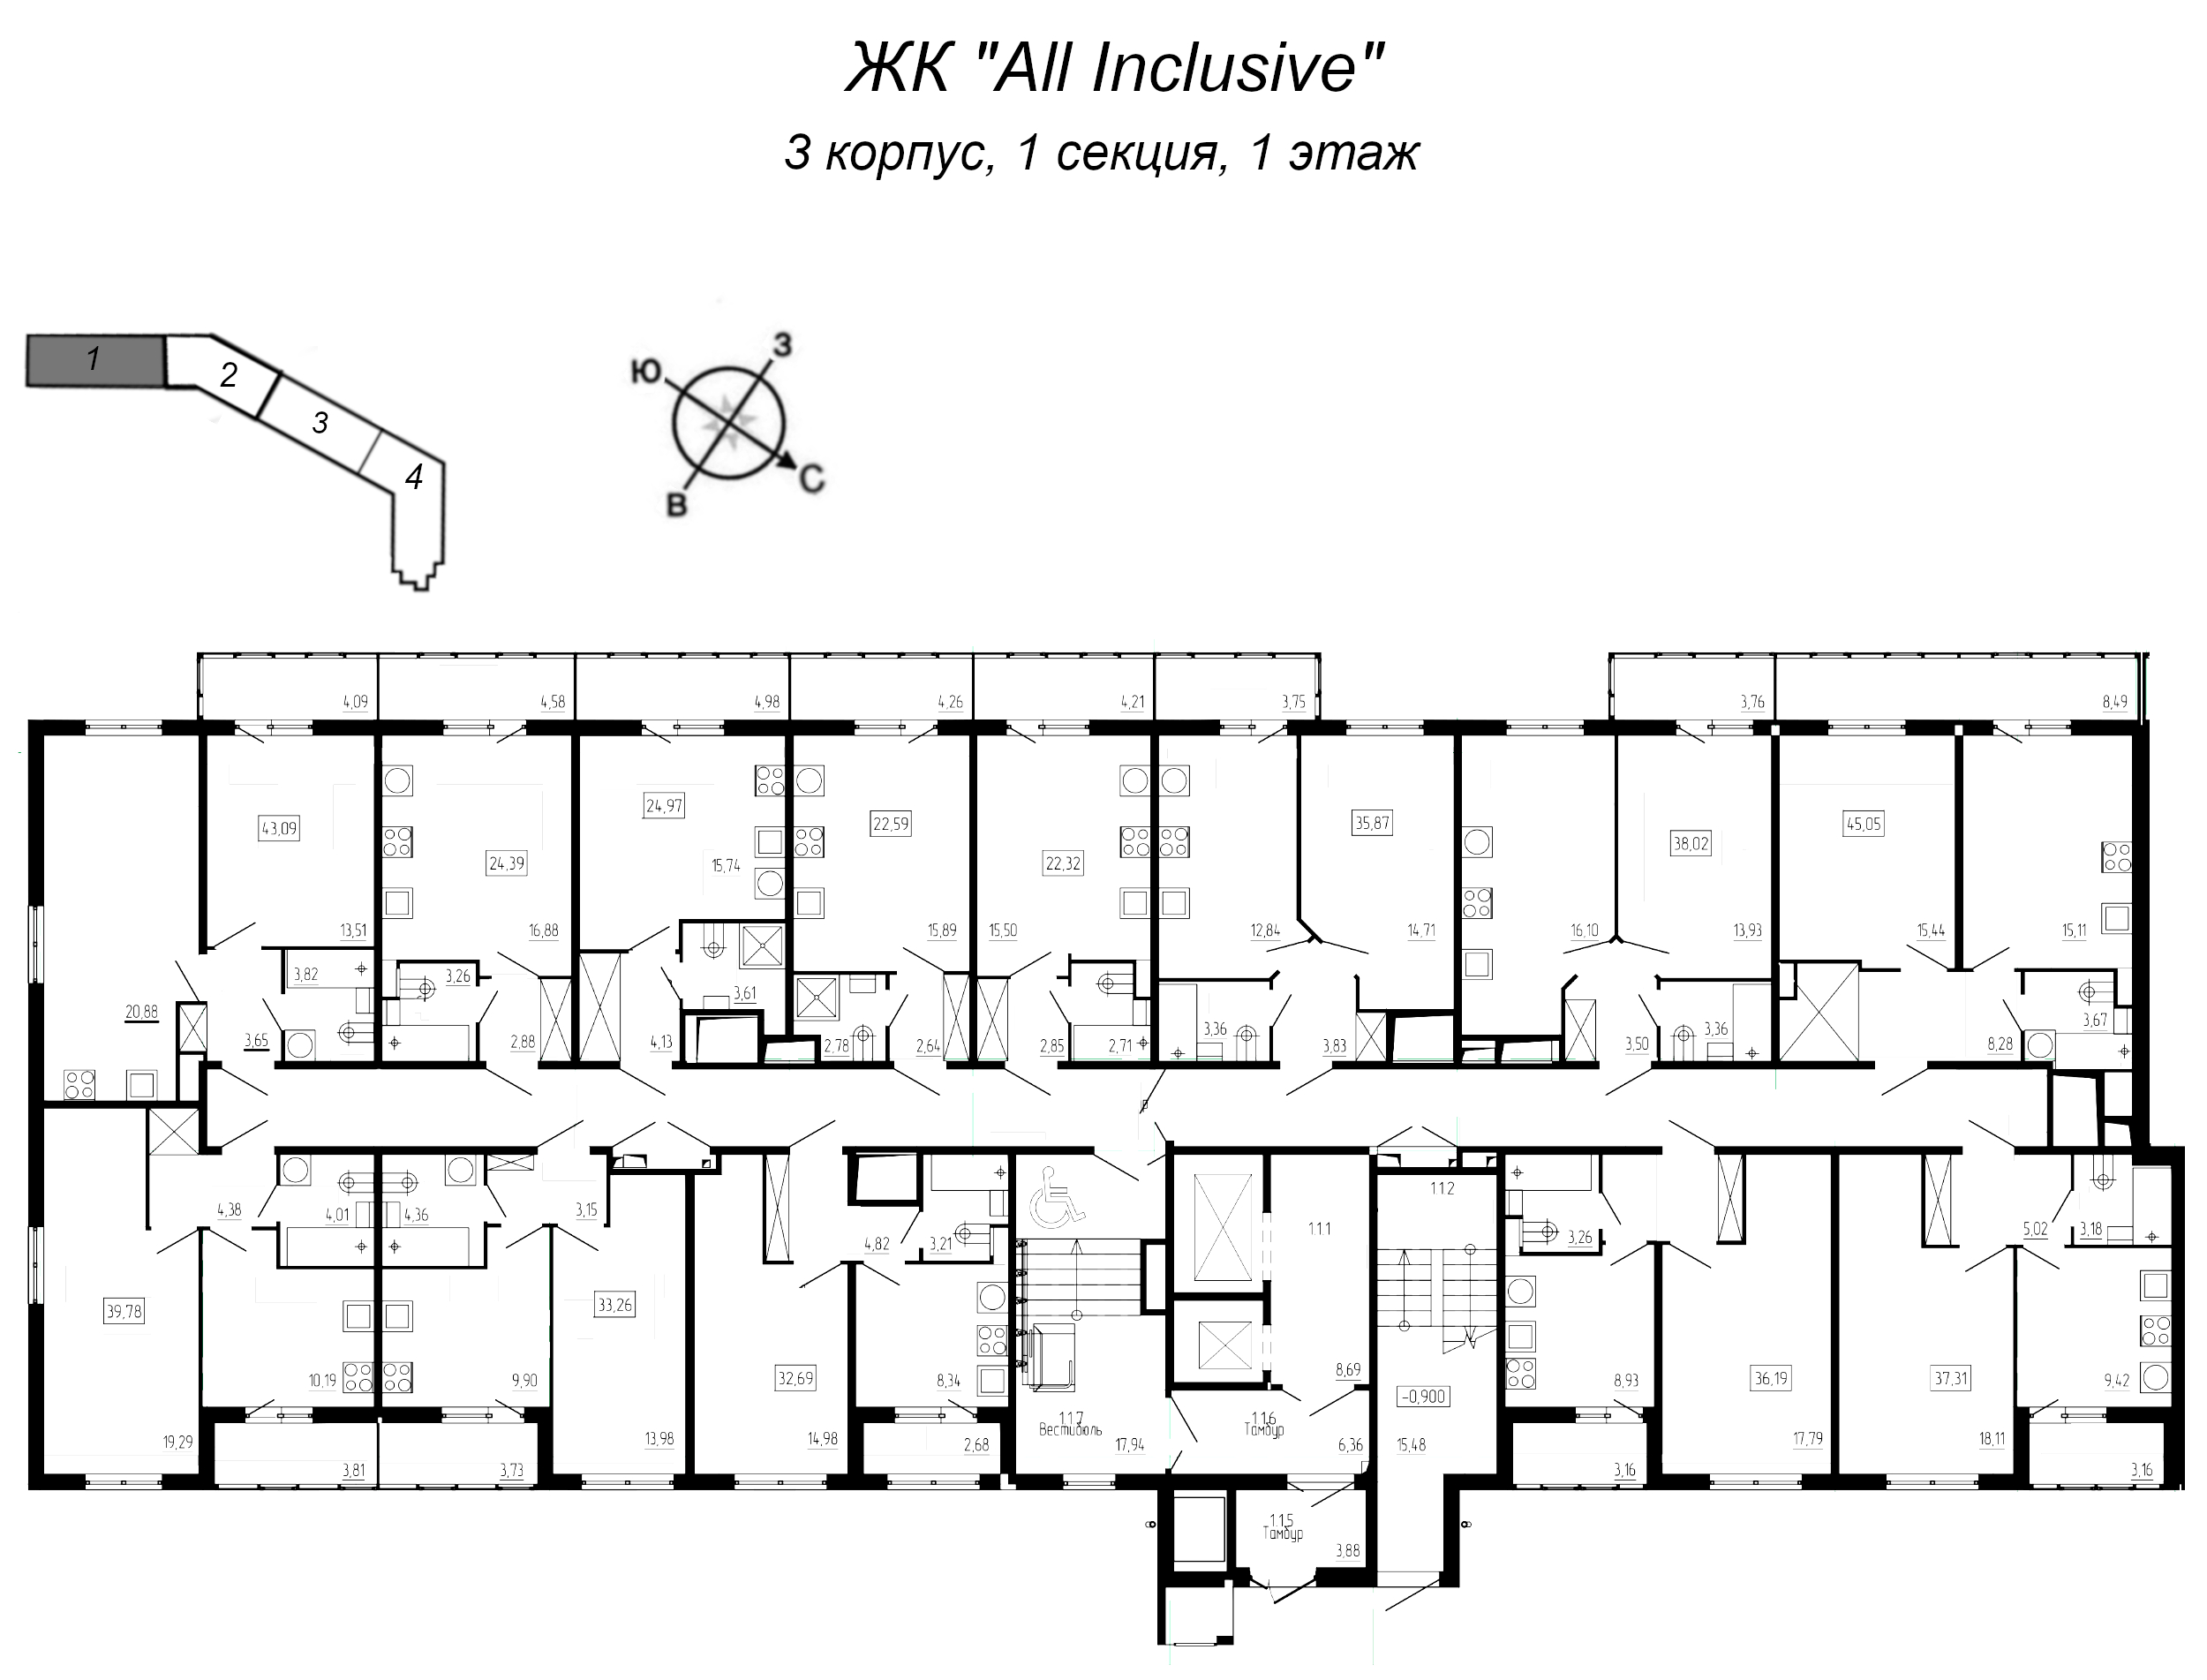 Квартира-студия, 24.39 м² в ЖК "All Inclusive" - планировка этажа